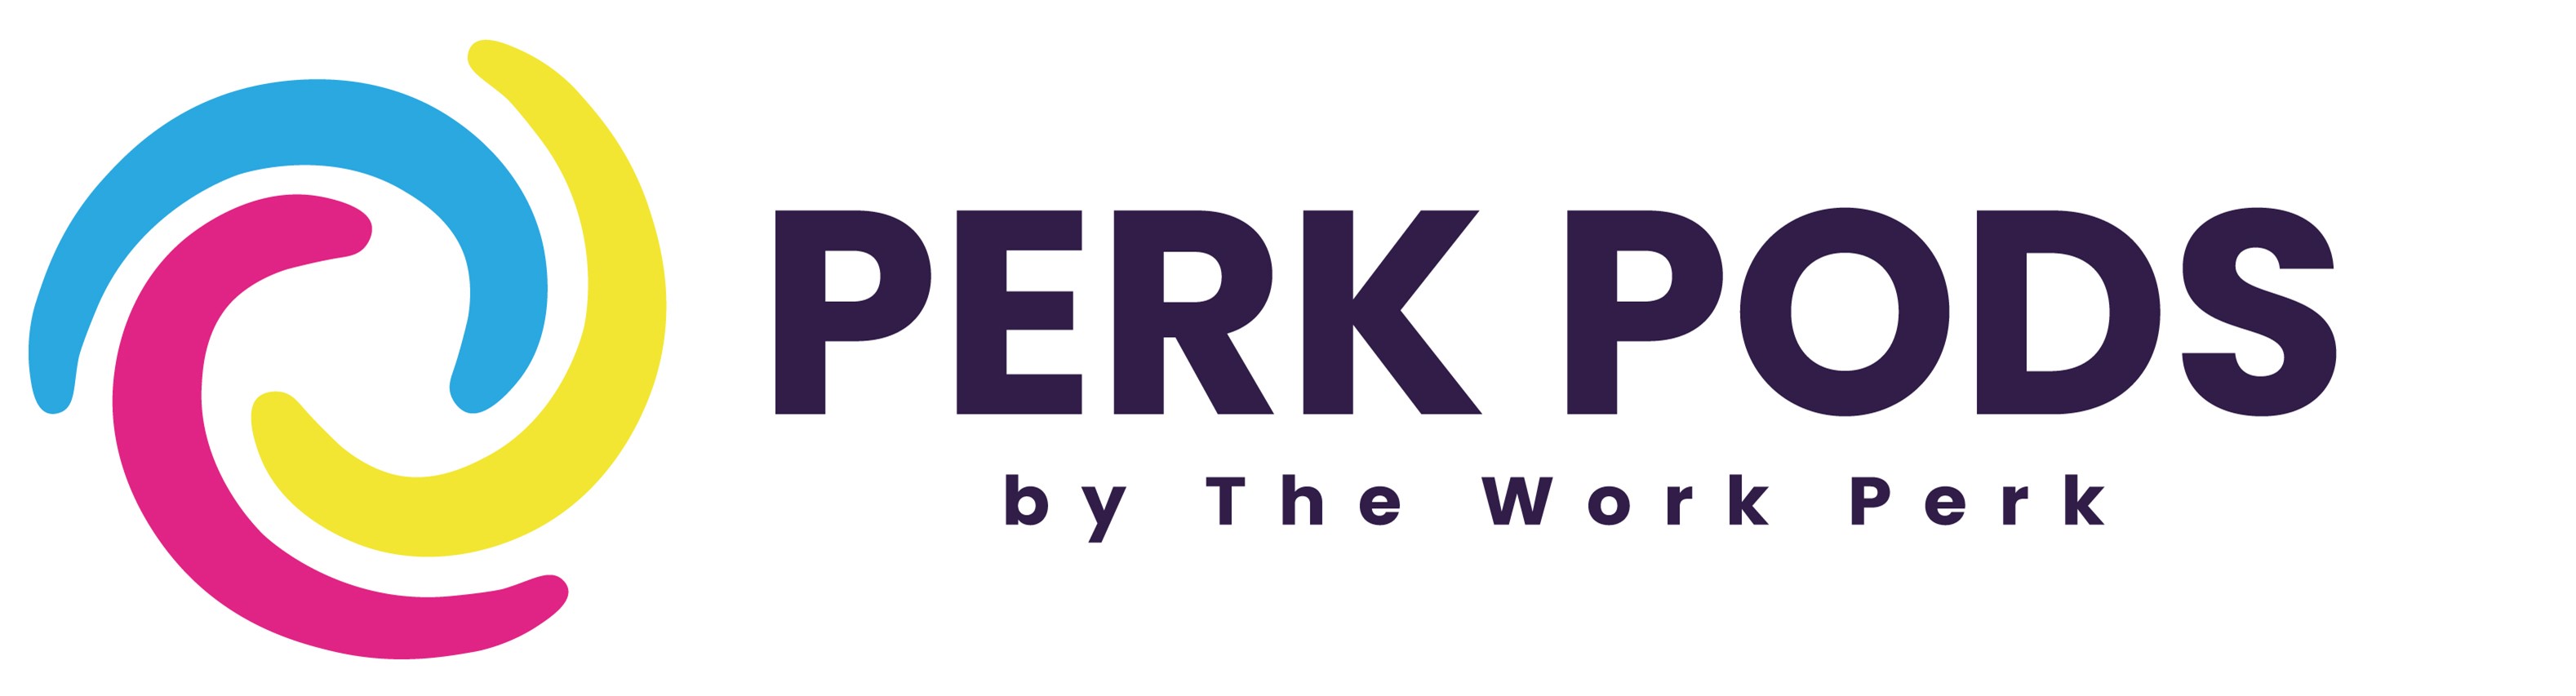 VisionRi Perk Pods (part of The Work Perk) image.